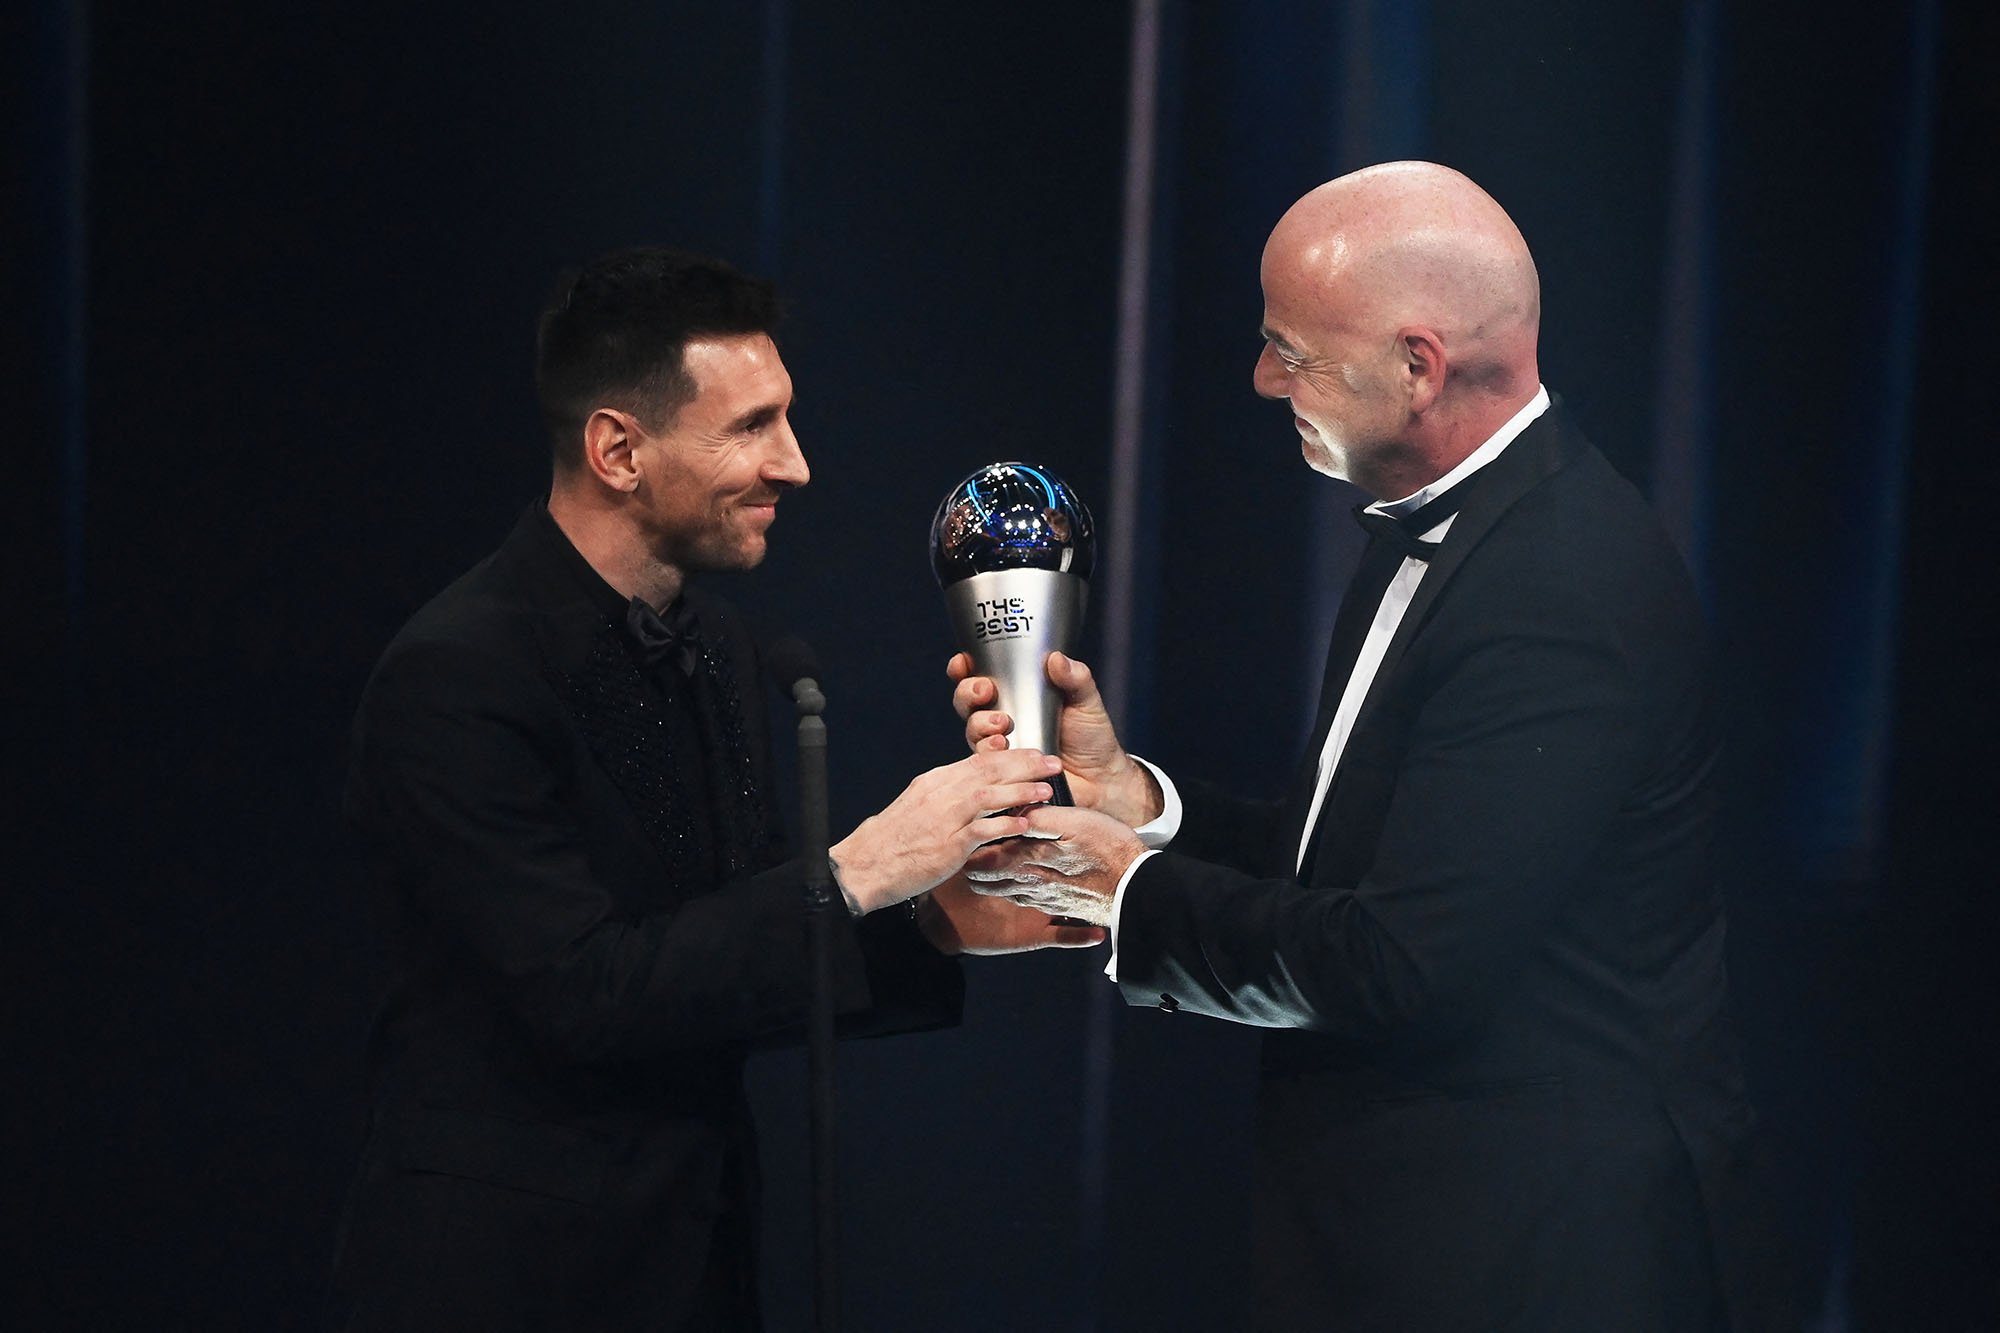 FIFA-Präsident Gianni Infantino überreicht Messi den FIFA-Award (Bild: Franck Fife/AFP)